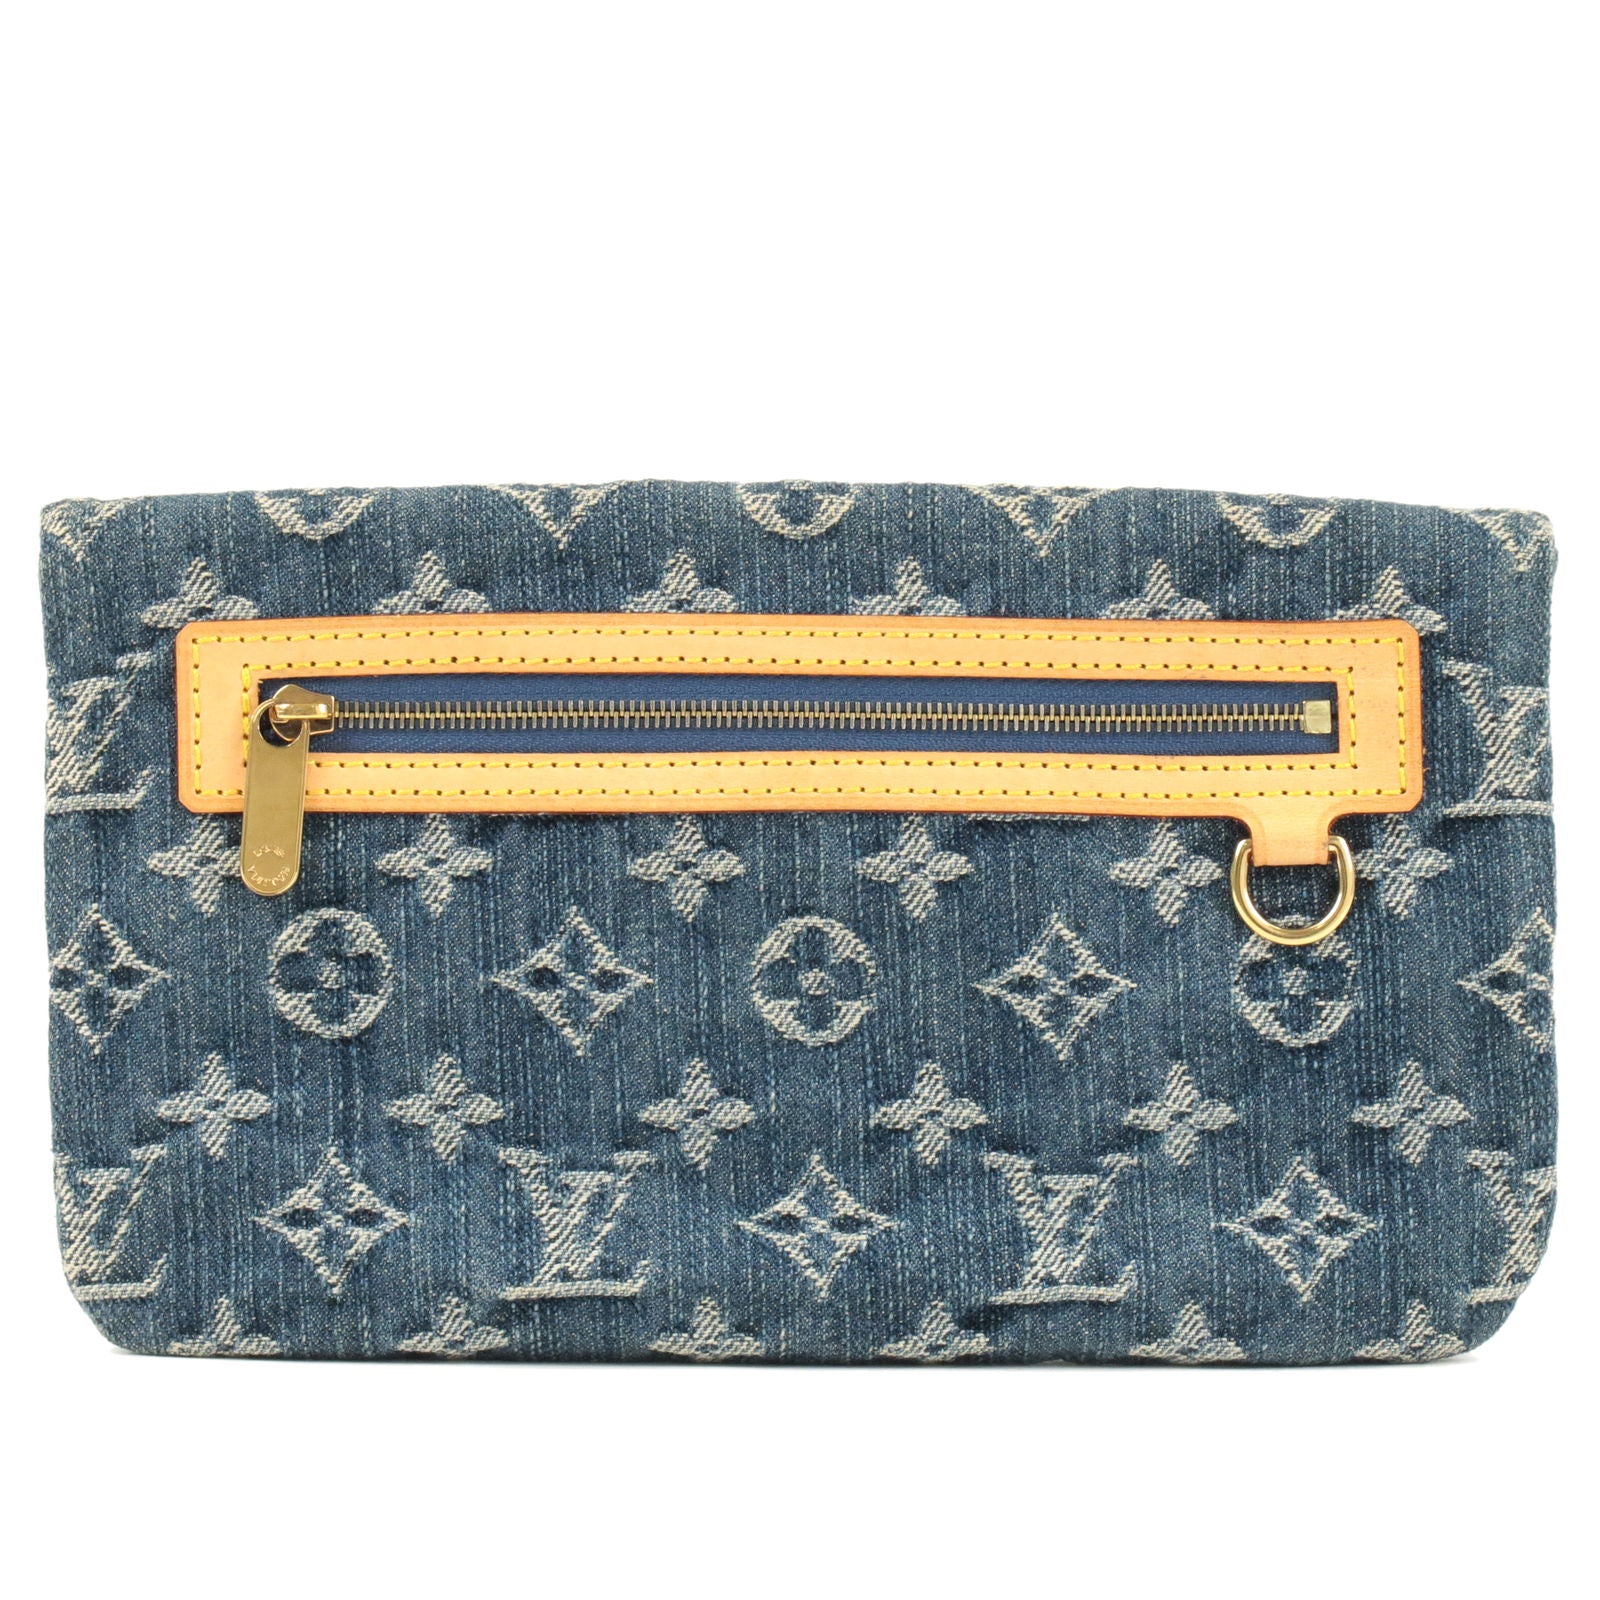 M95007 – dct - Clutch - Bag - Alle Taschen ansehen Louis Vuitton